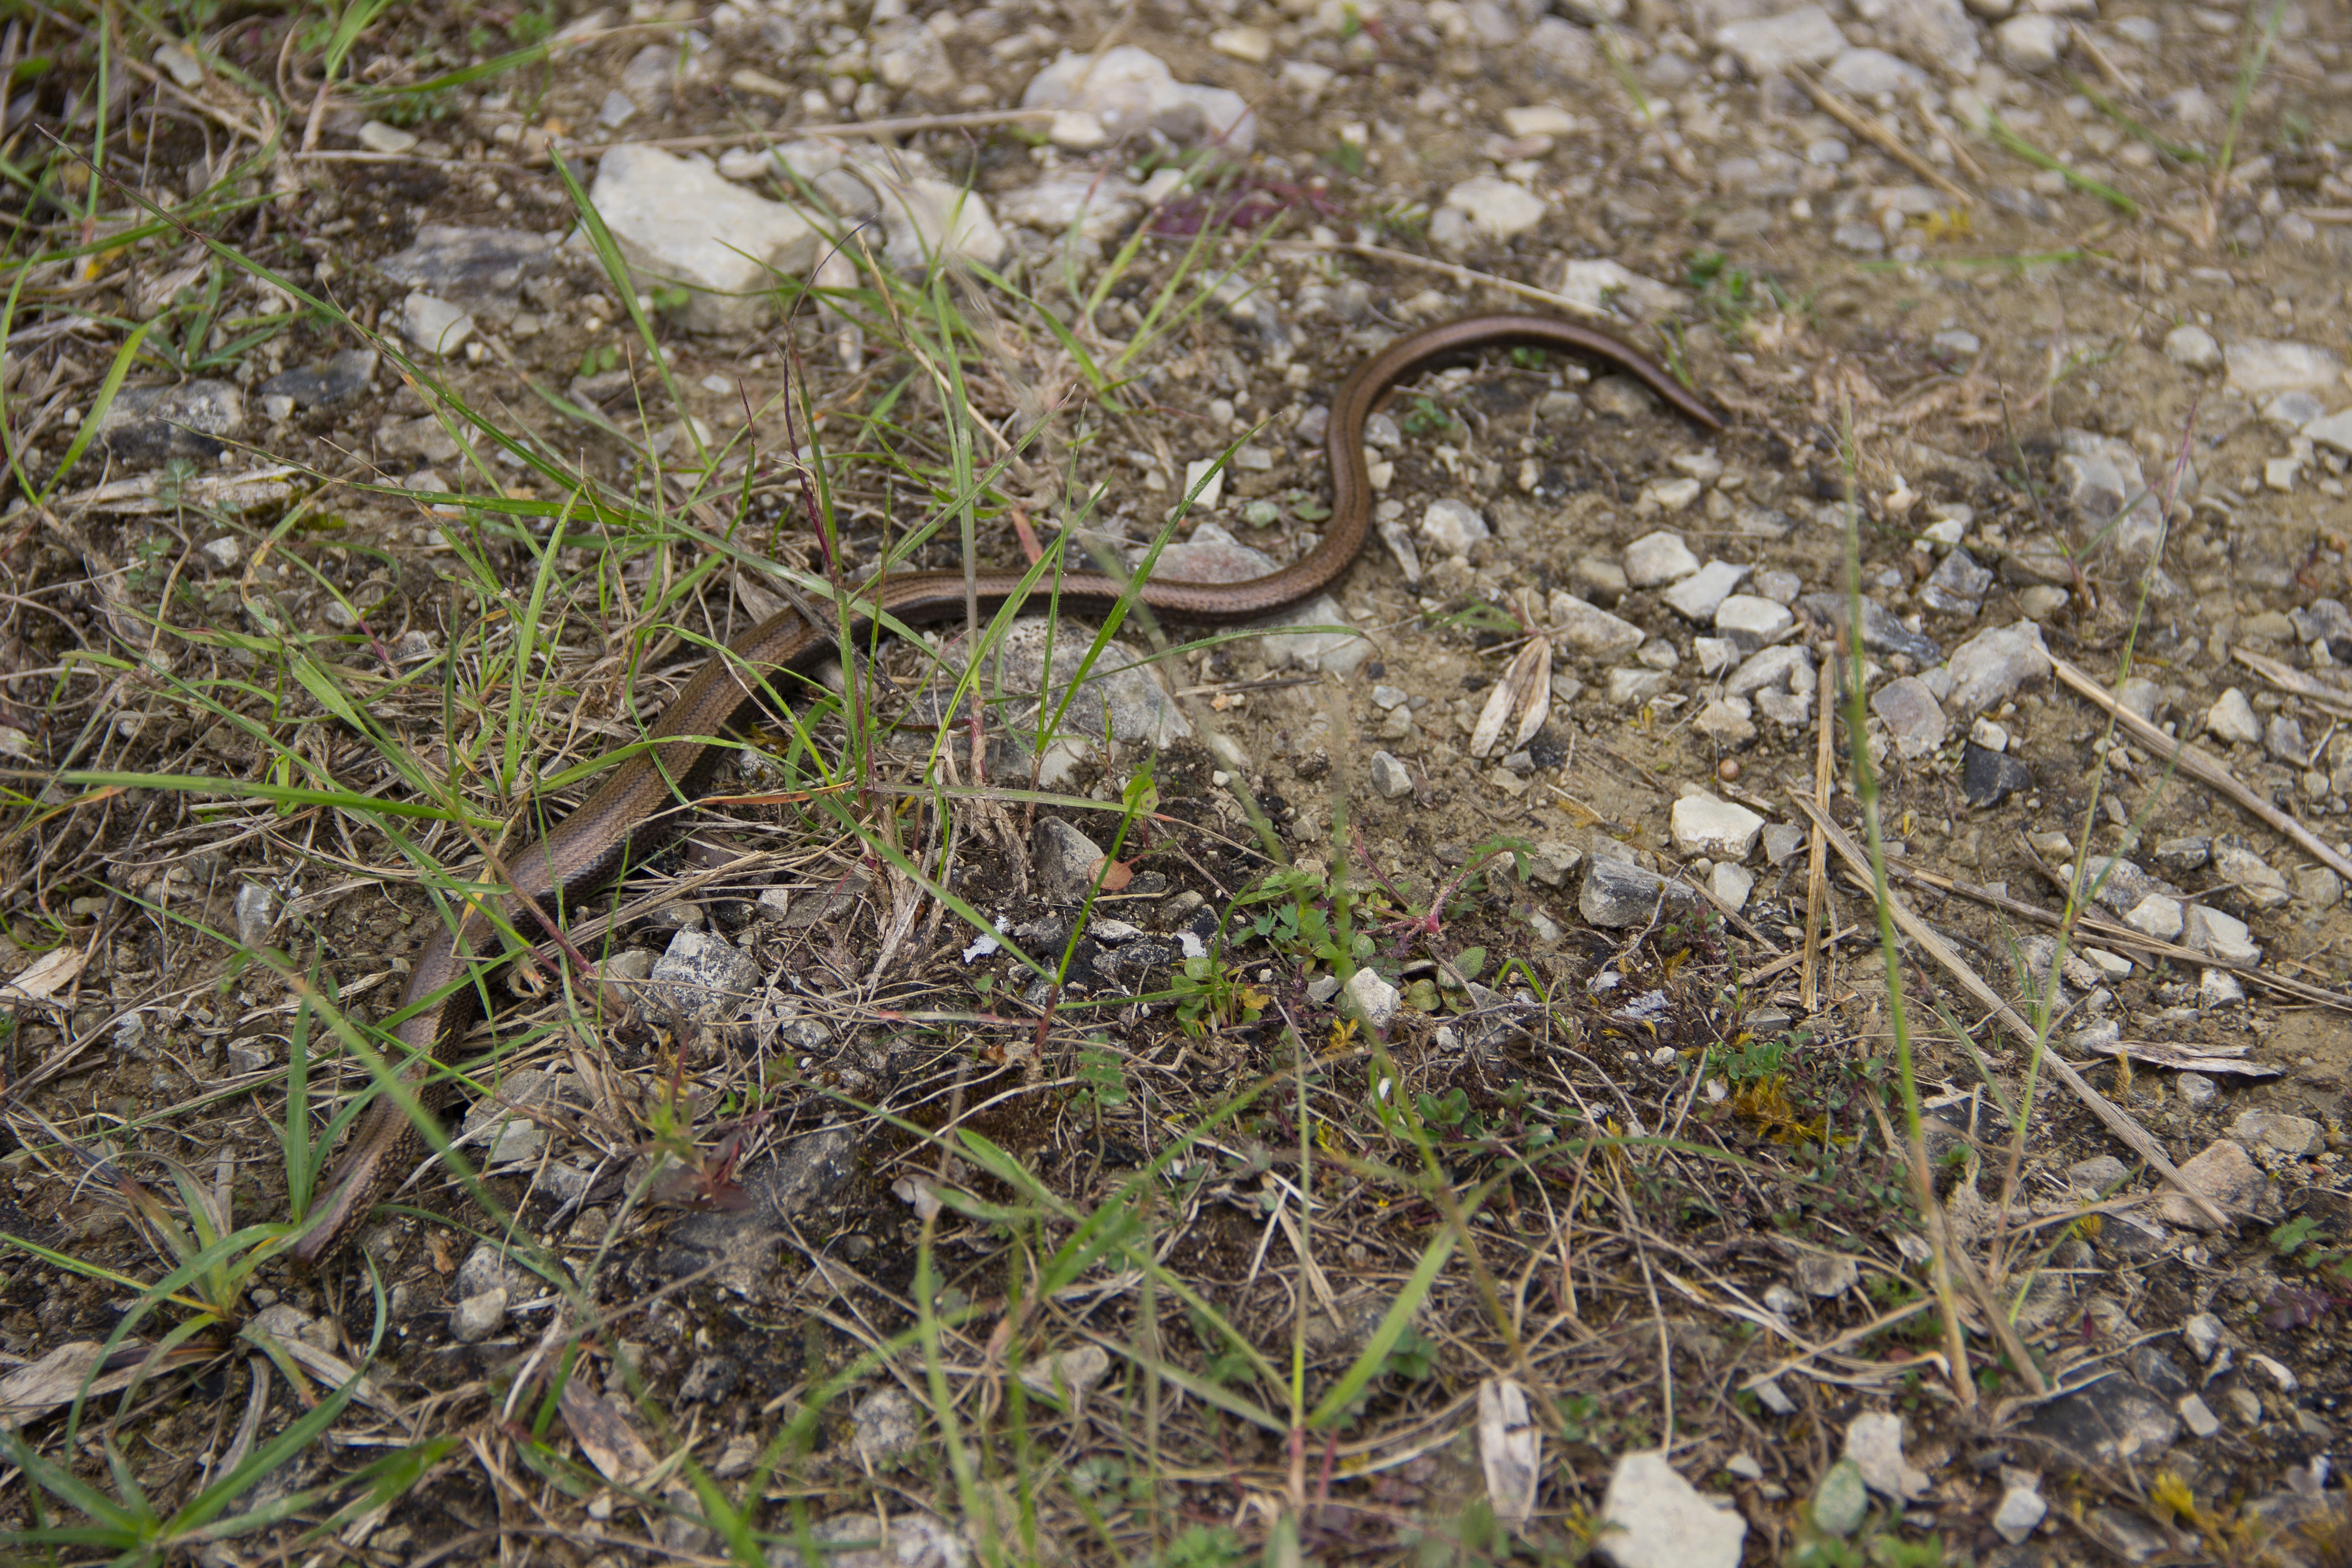 brown snake